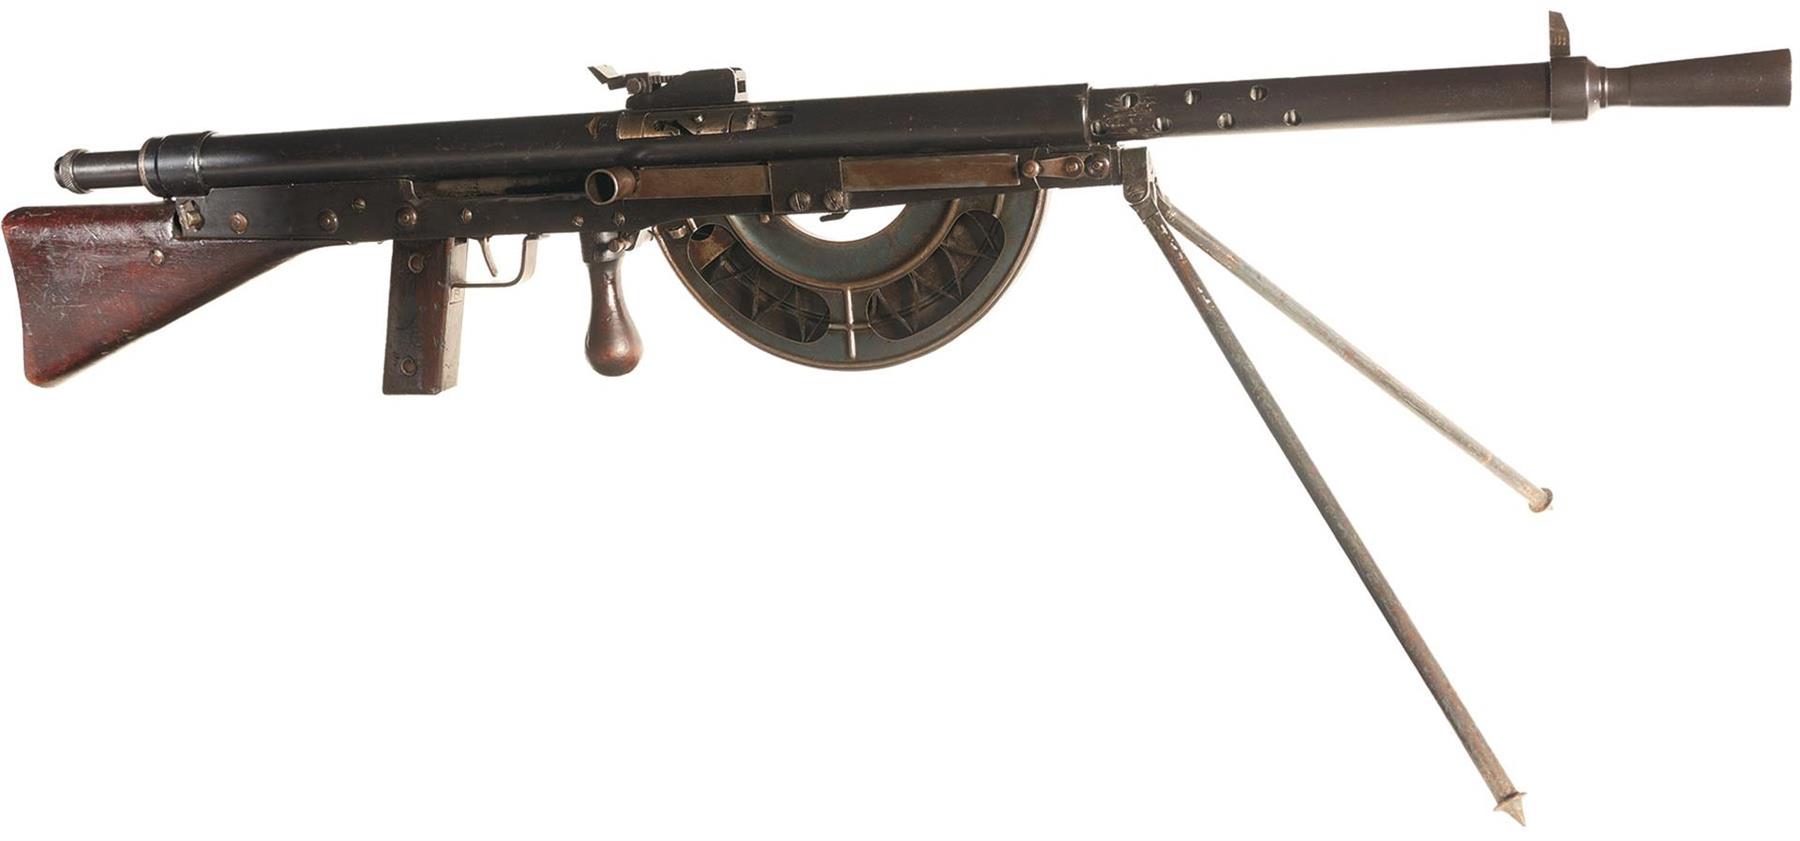 Fuller french. Chauchat mle 1915. Французский пулемет первой мировой Шоша. Пулемет Шоша 1918. Ручной пулемет Шоша.